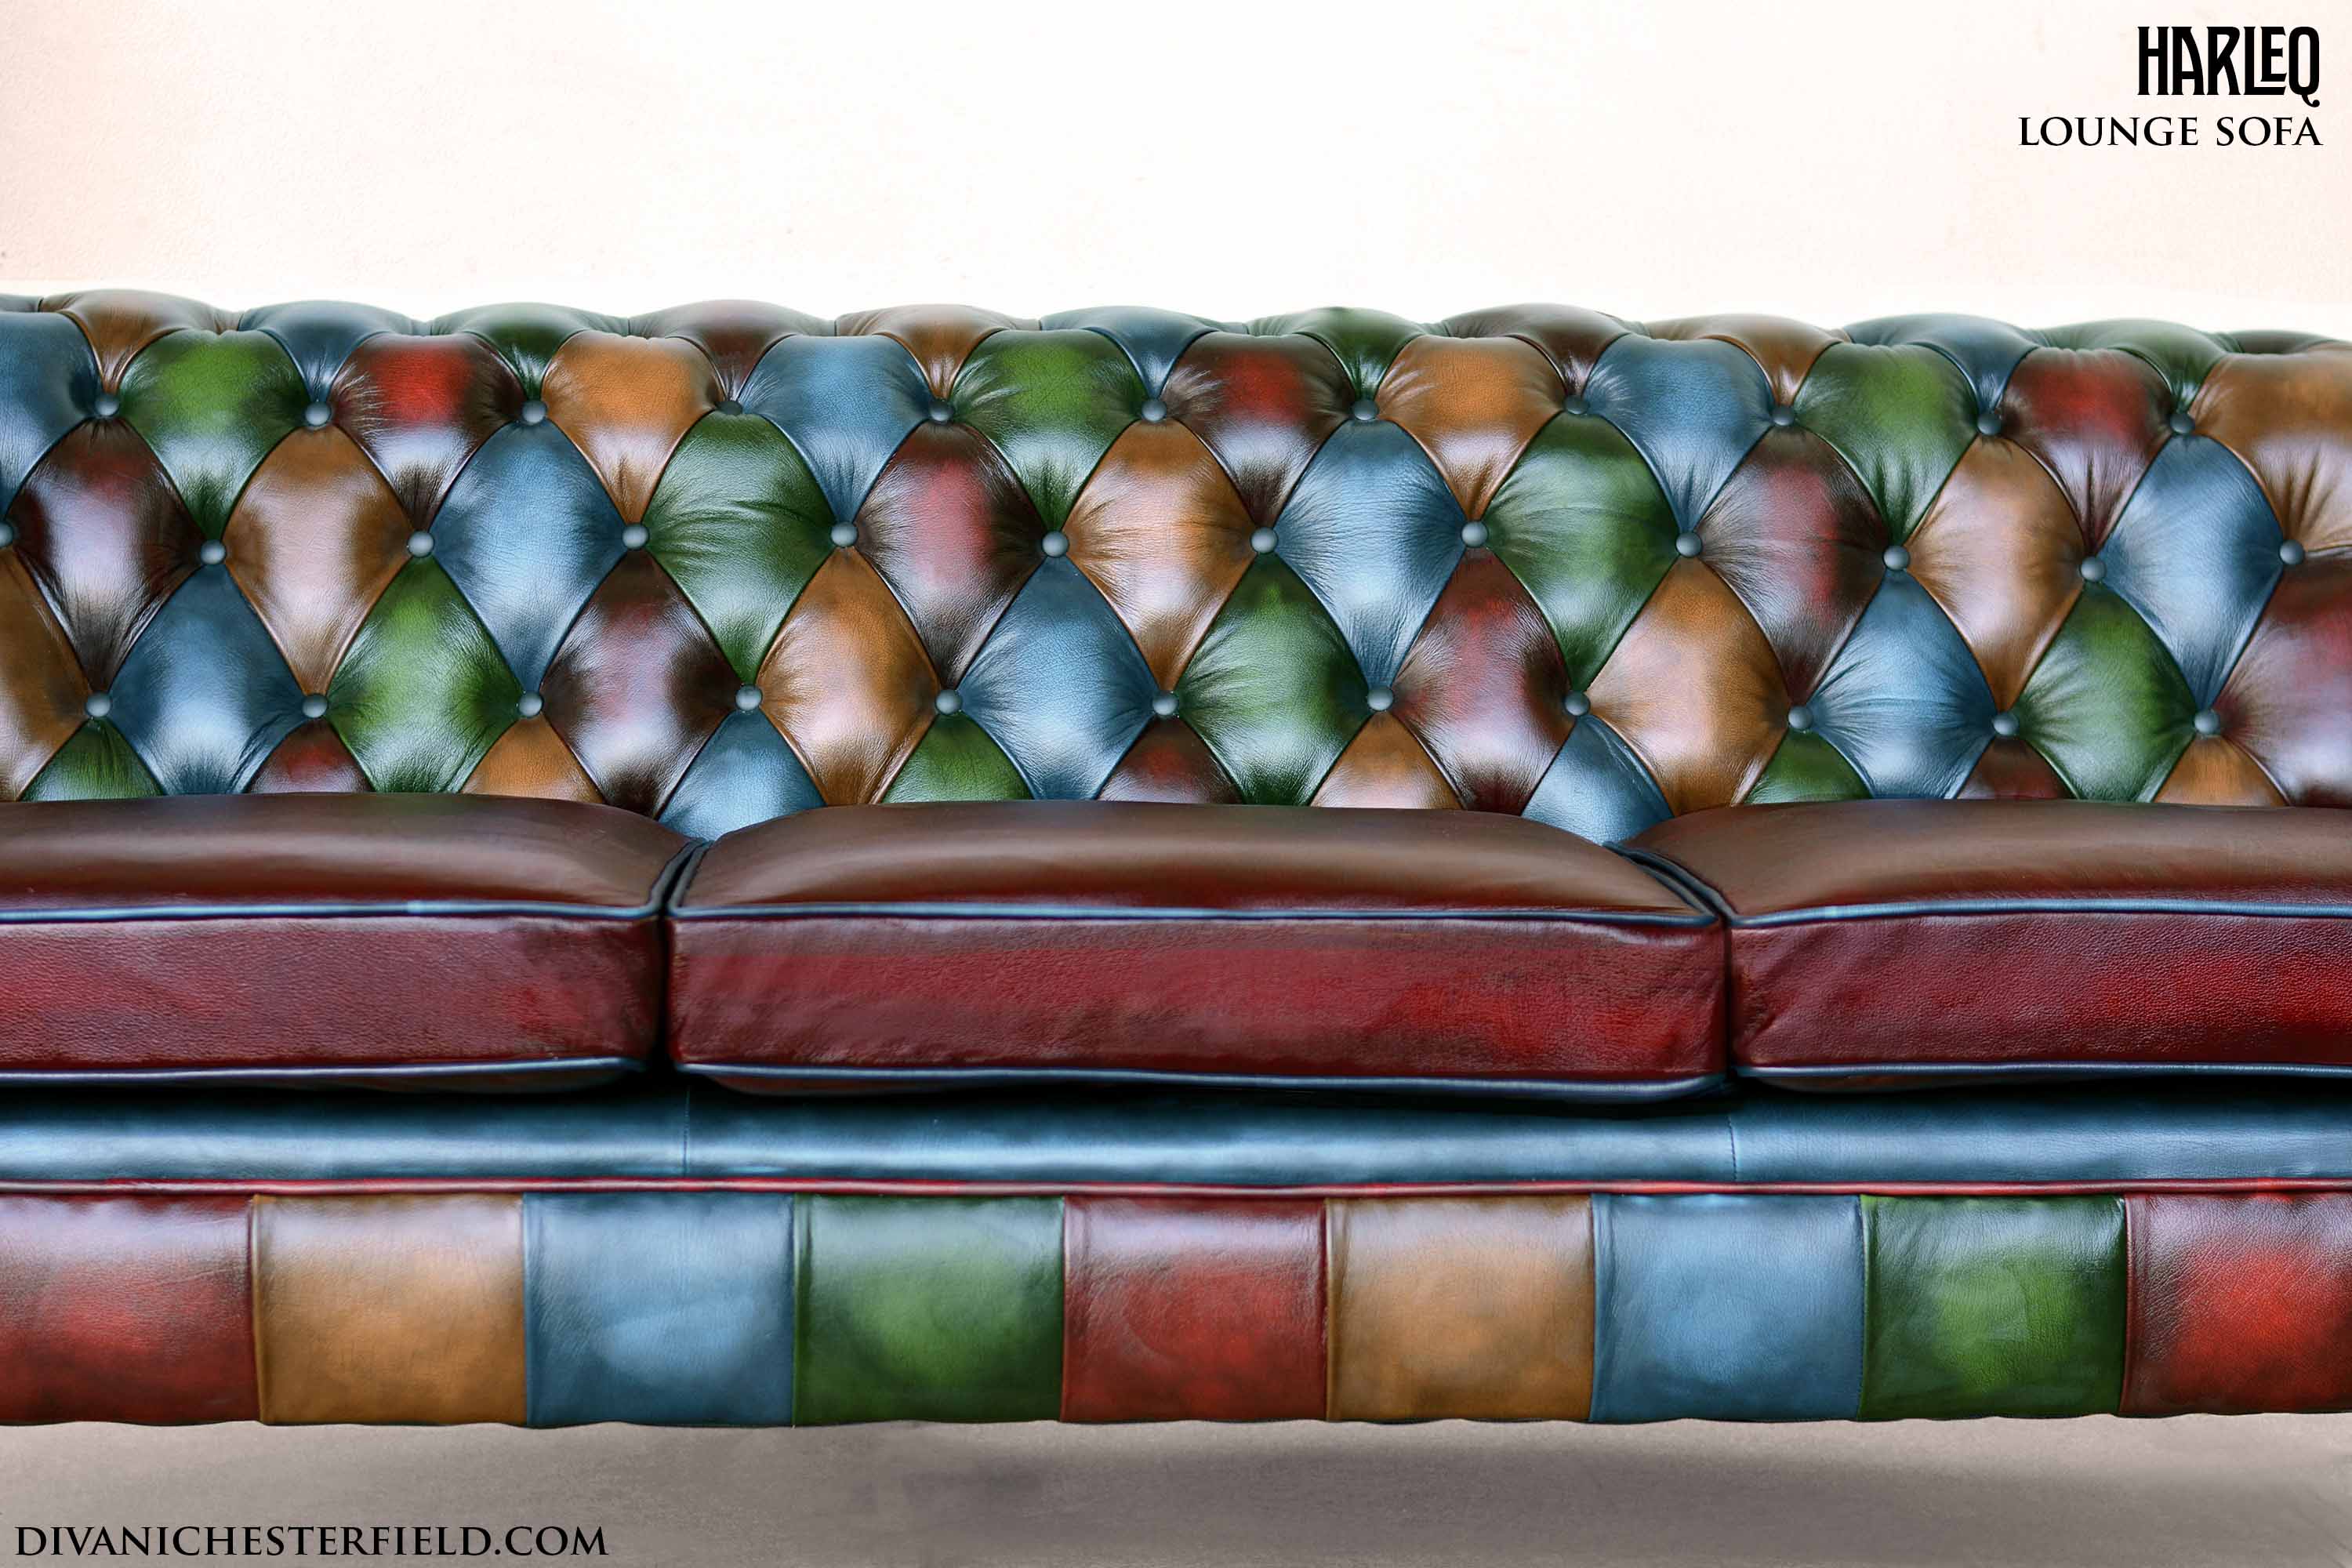 divano panca chesterfield moderno in varie pelli patchwork con cuscini imbottita bottoni capitonné